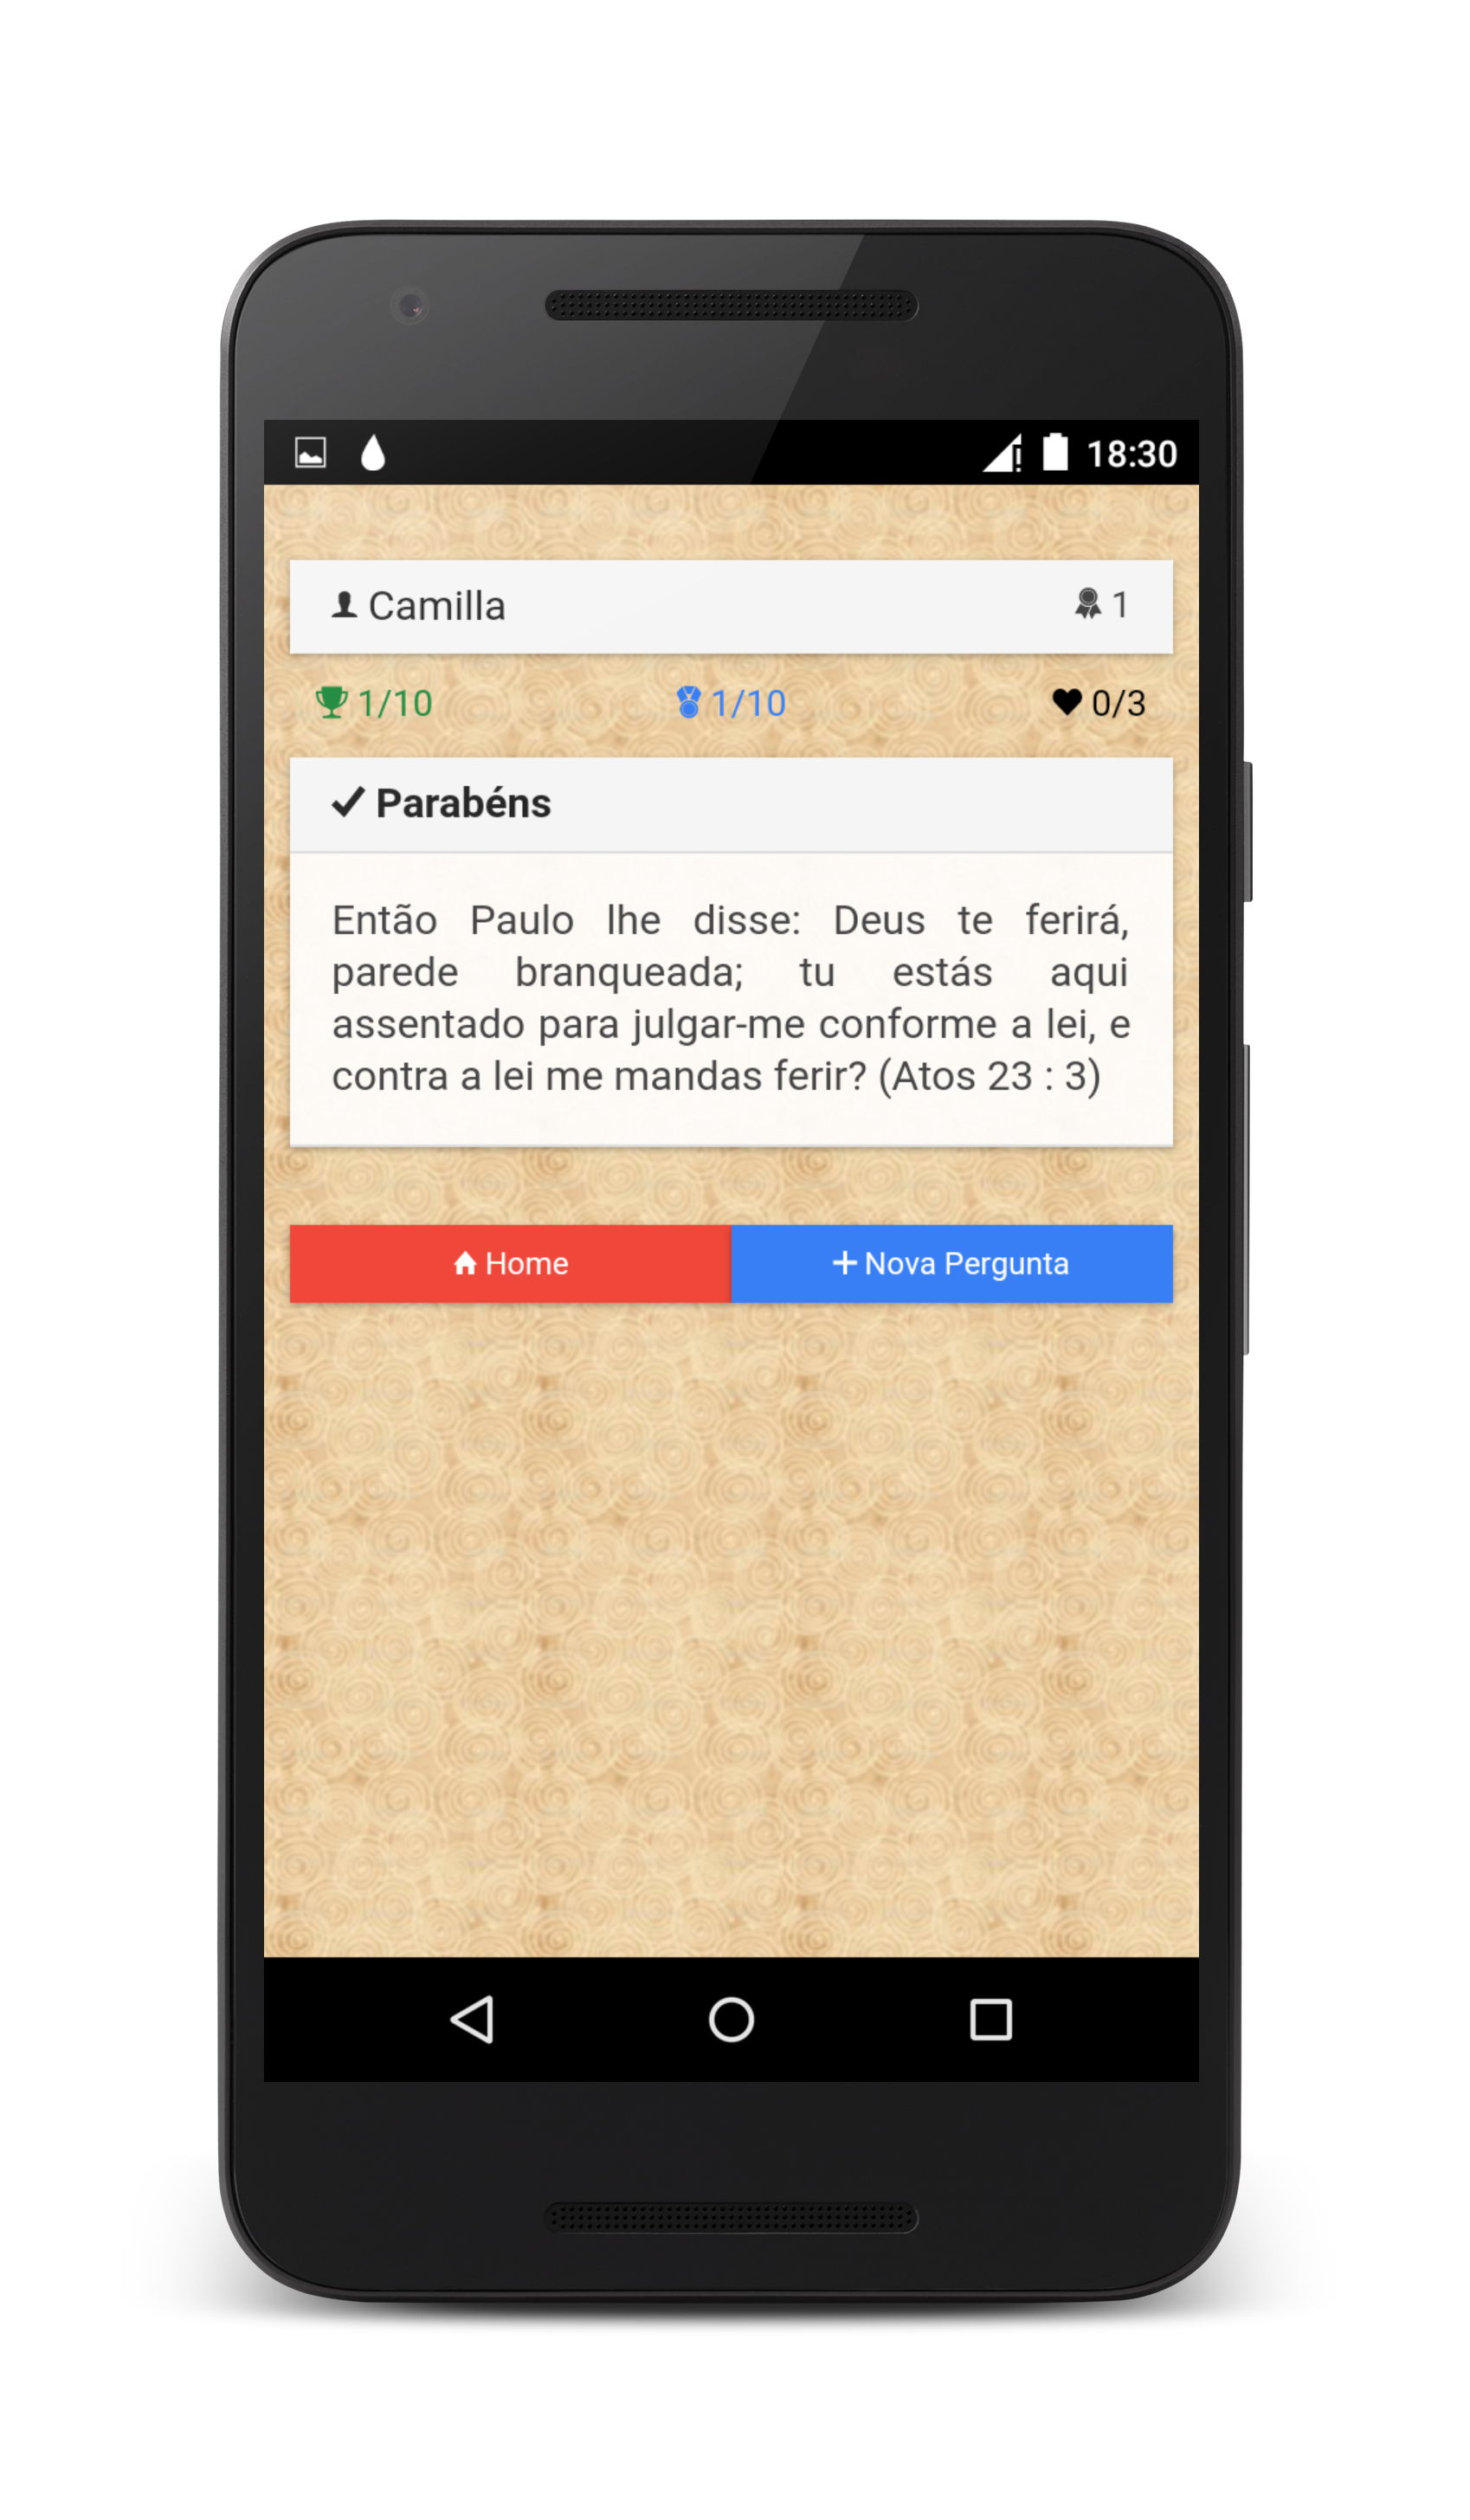 Android application Perguntas da Bíblia screenshort